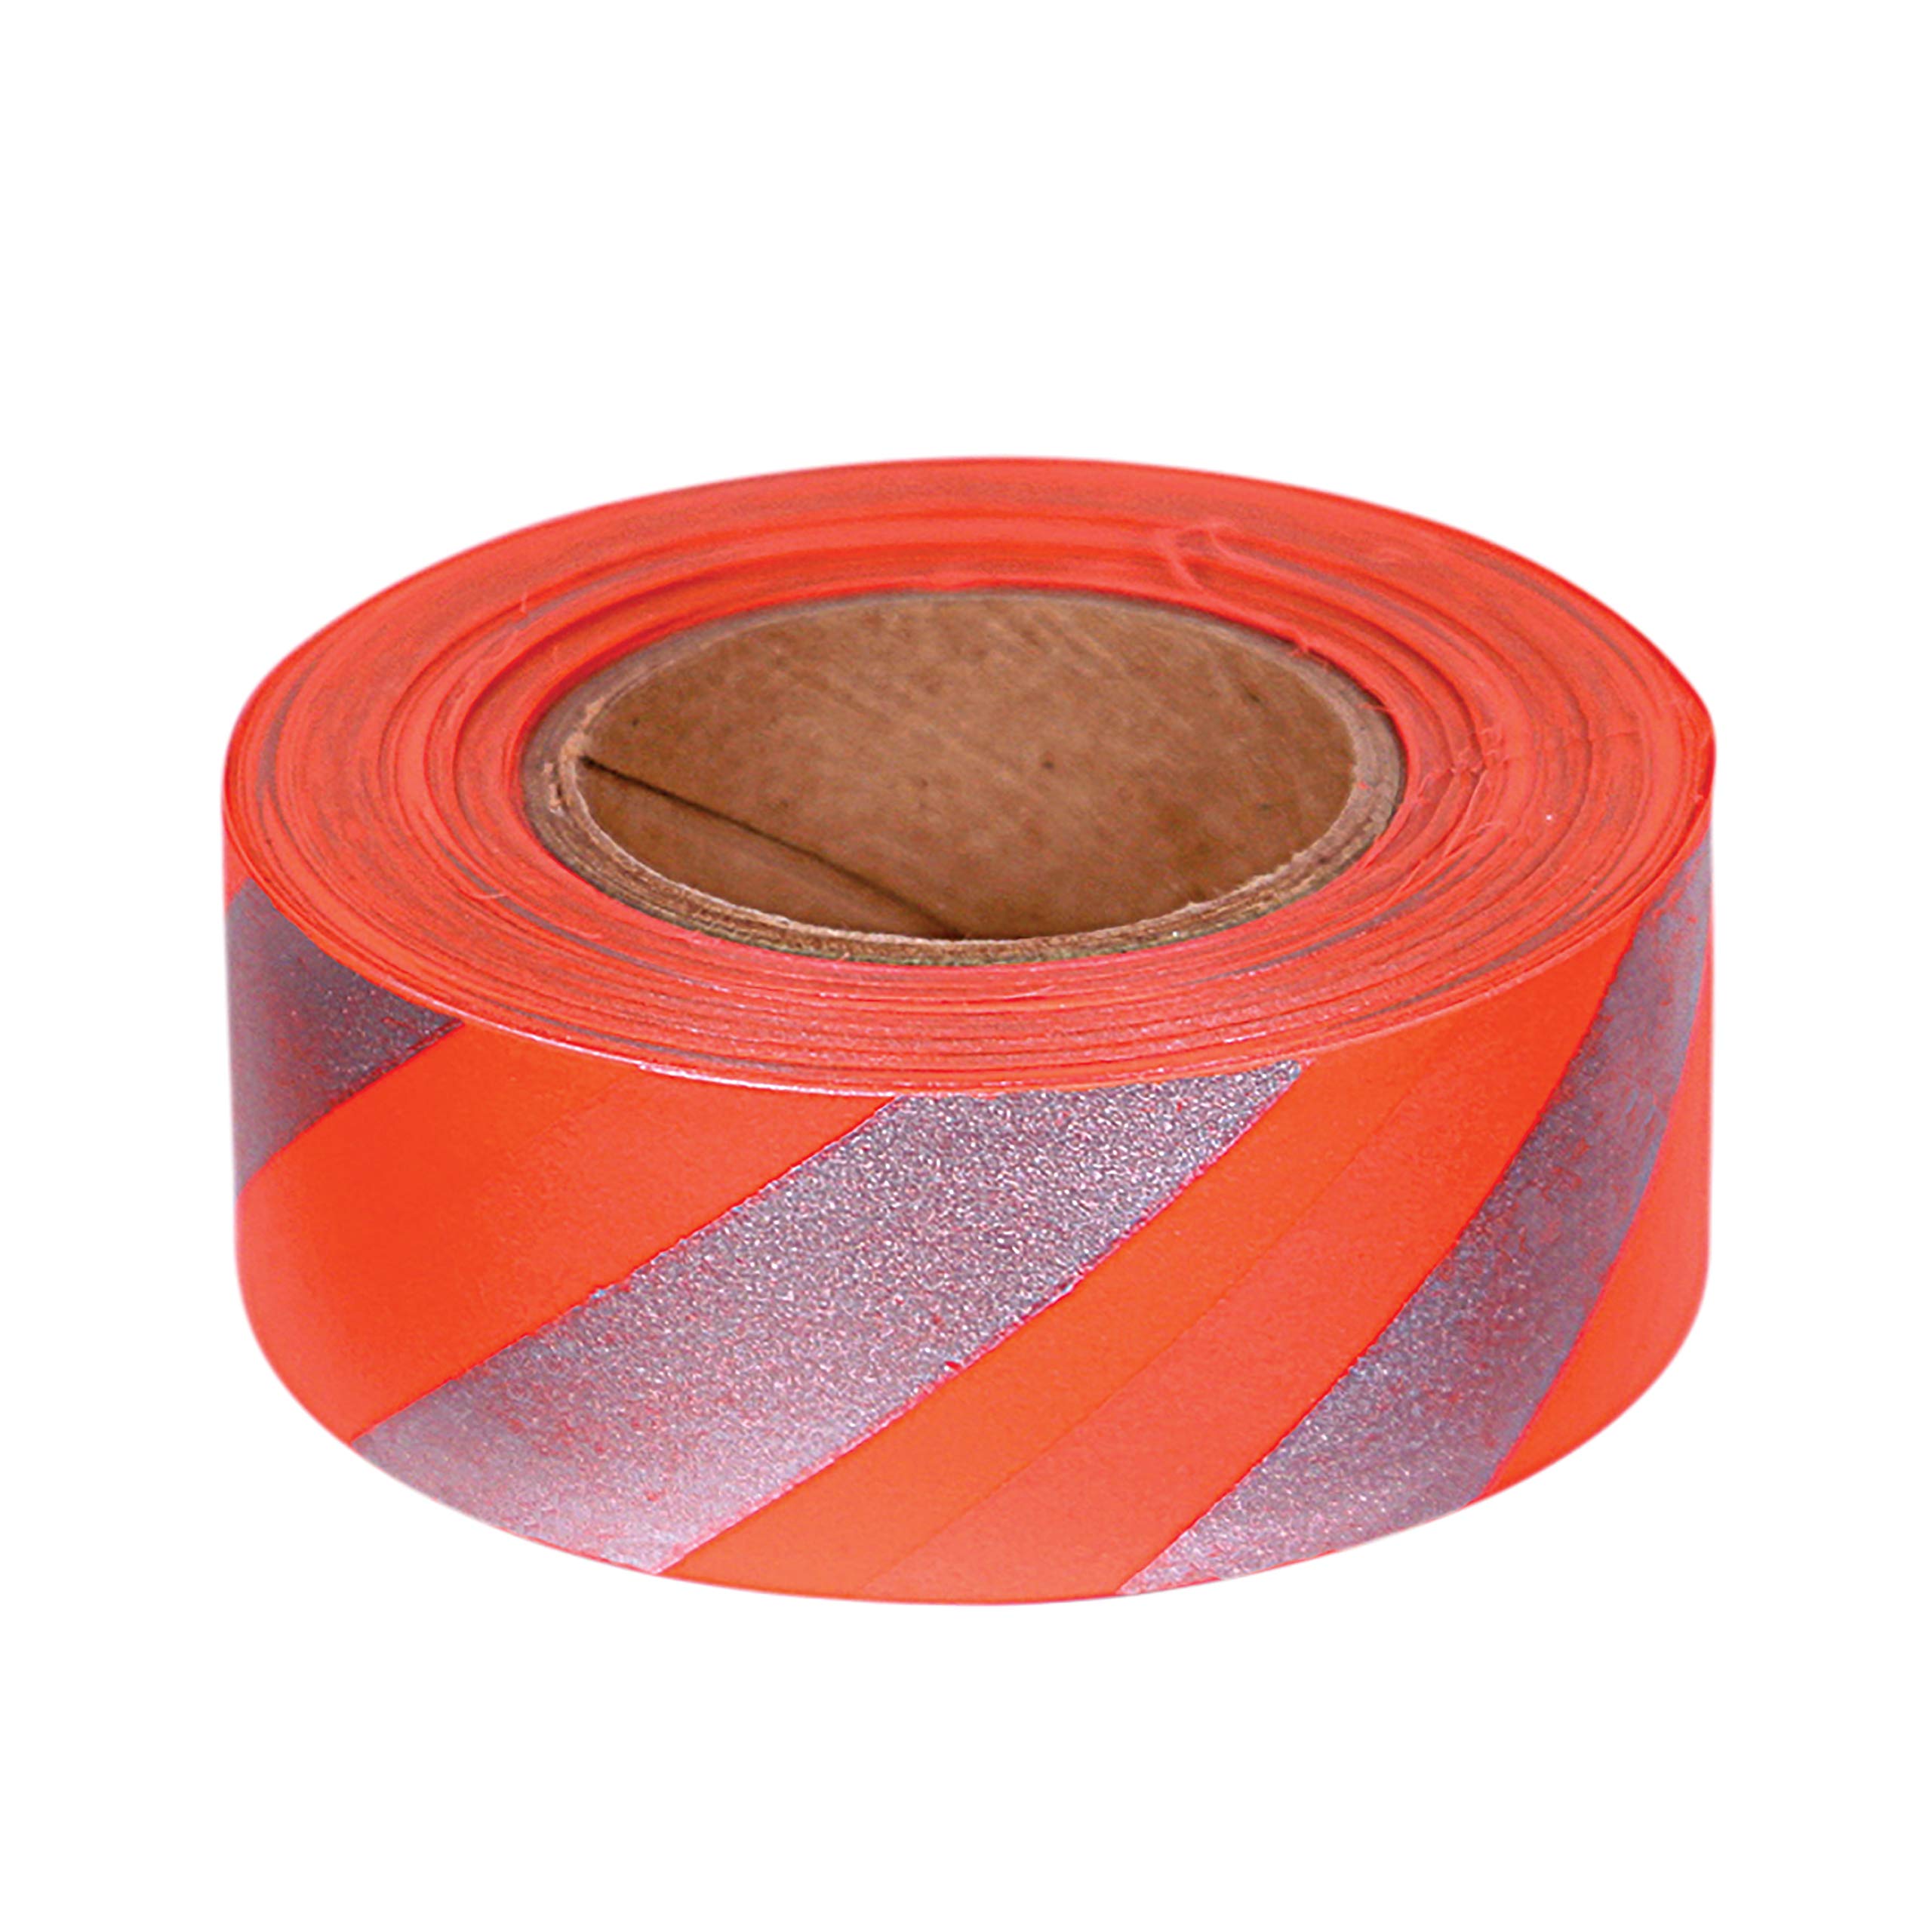 Allen Company Trail Marking/ Flagging Tape, 150 Ft. Roll, Orange, One Size, (46)